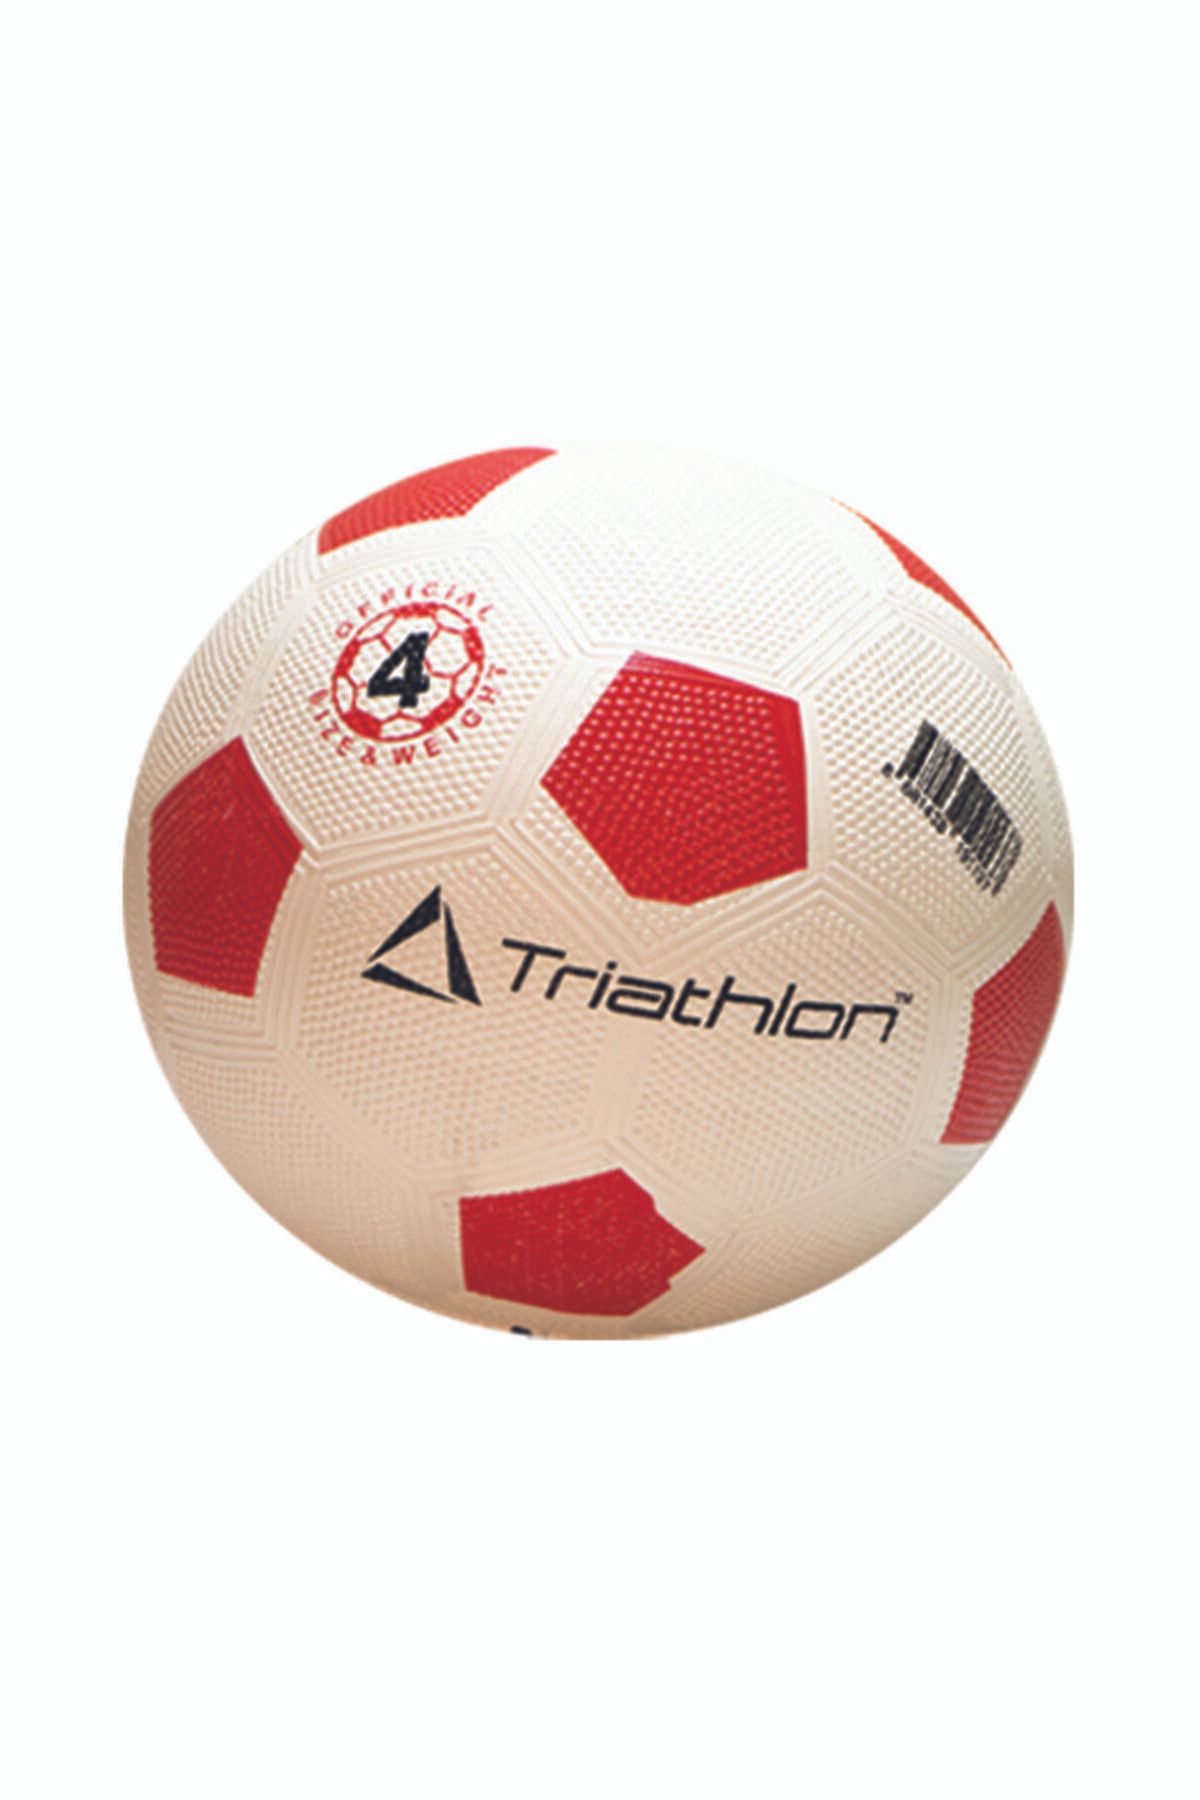 Triathlon T140 Kauçuk Beyaz-kırmızı Futbol Topu